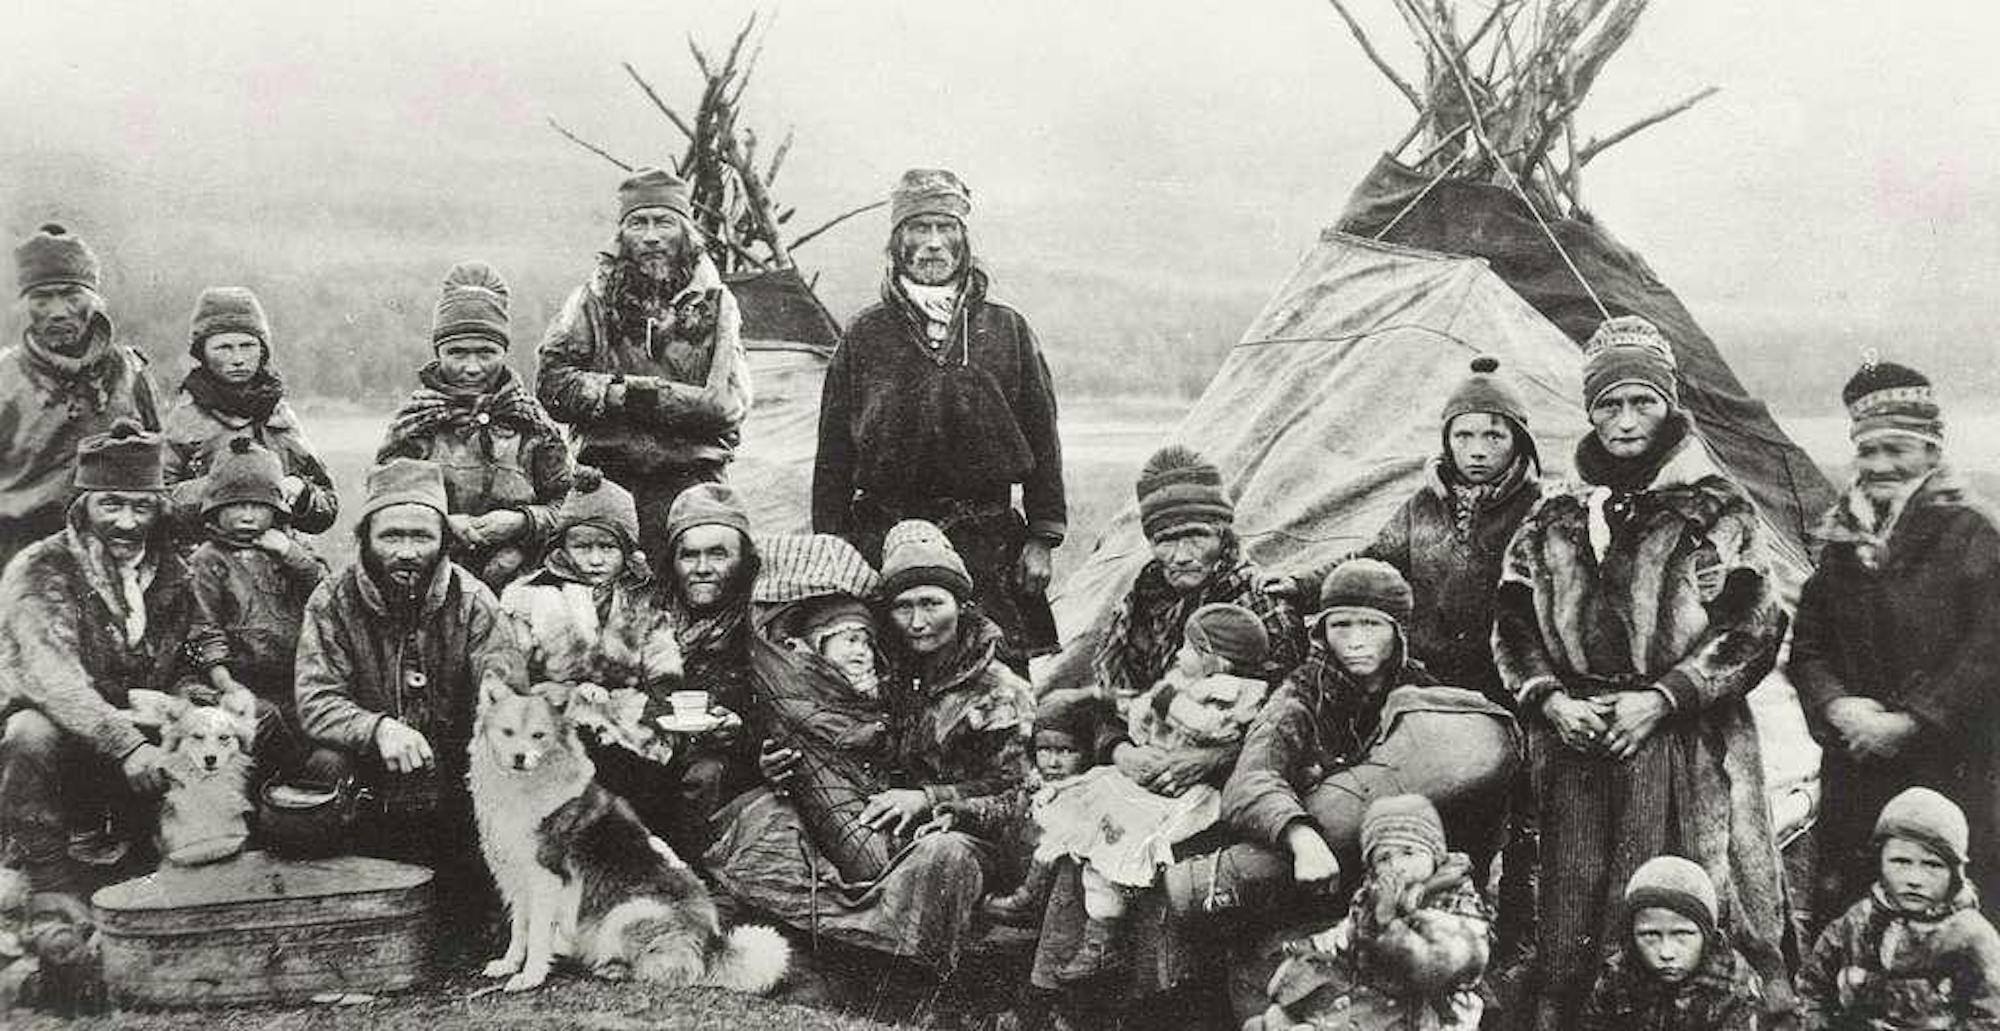 nordic-sami-people-lavvu-1900-1920-4fb887-1024.jpg